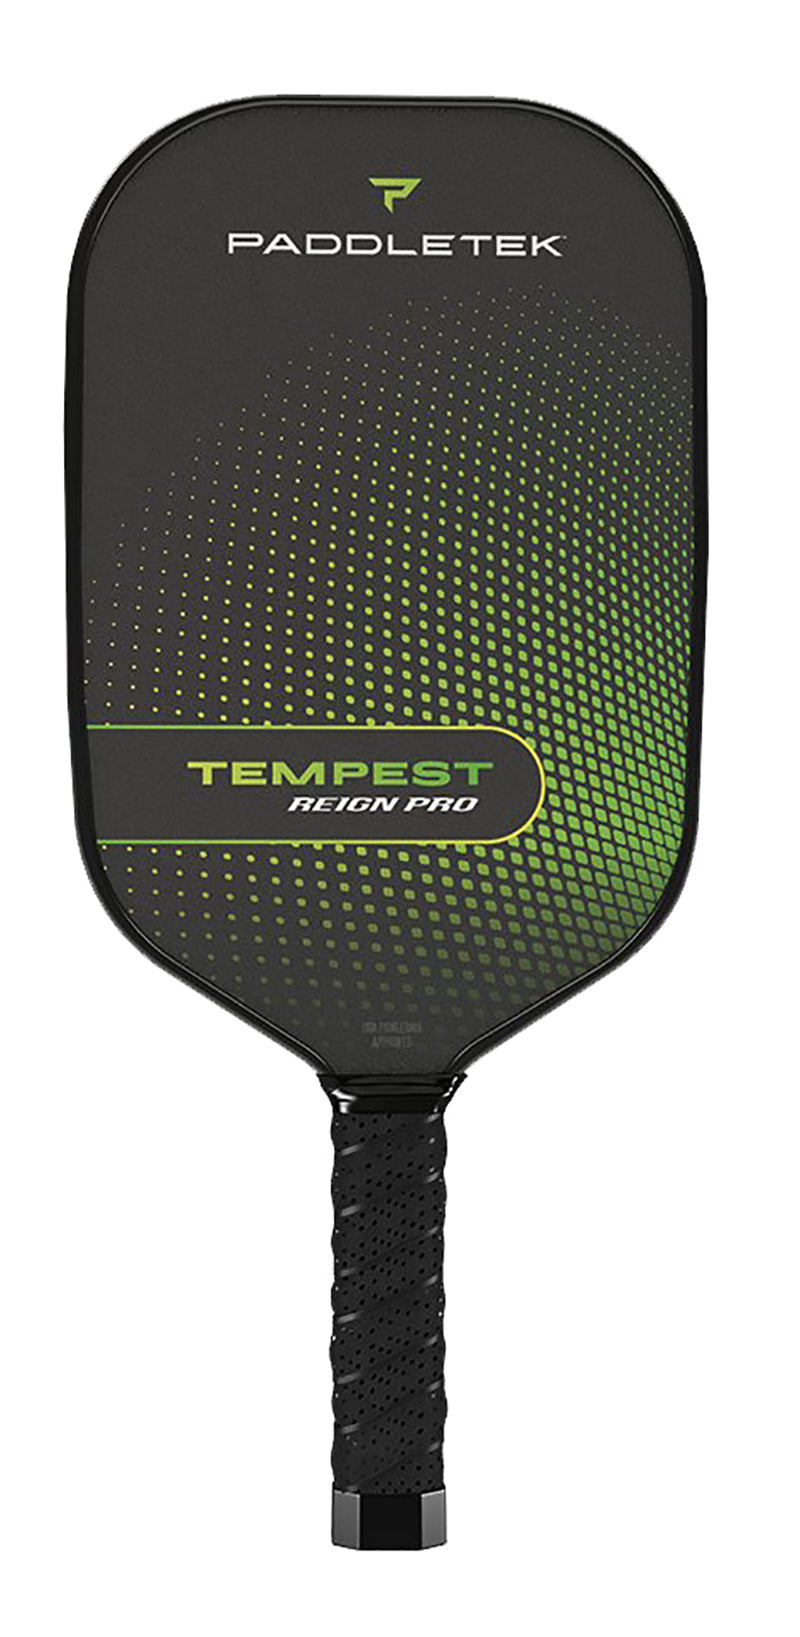 Paddletek Tempest Reign Pro Pickleball Paddle (Standard Grip) (Green) vid-40174021443671